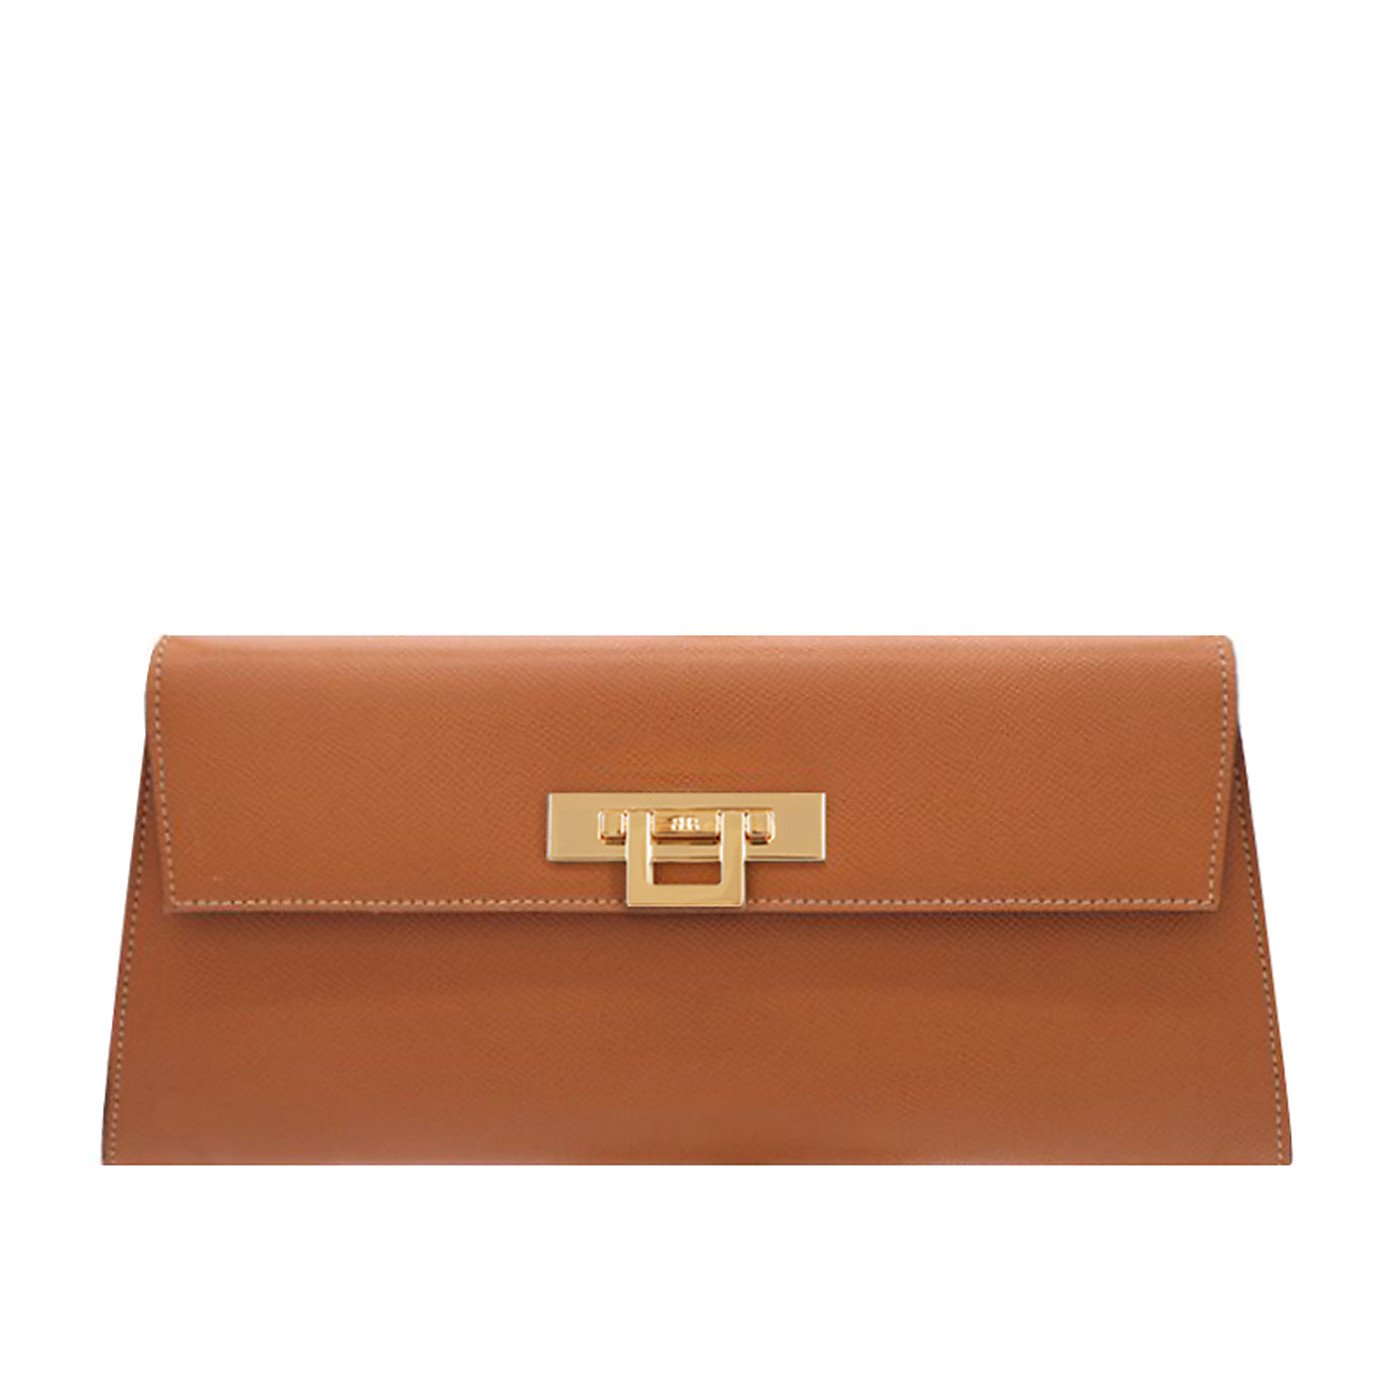 Lalage Beaumont Fonteyn Clutch Palmellato Leather Handbag - Tan